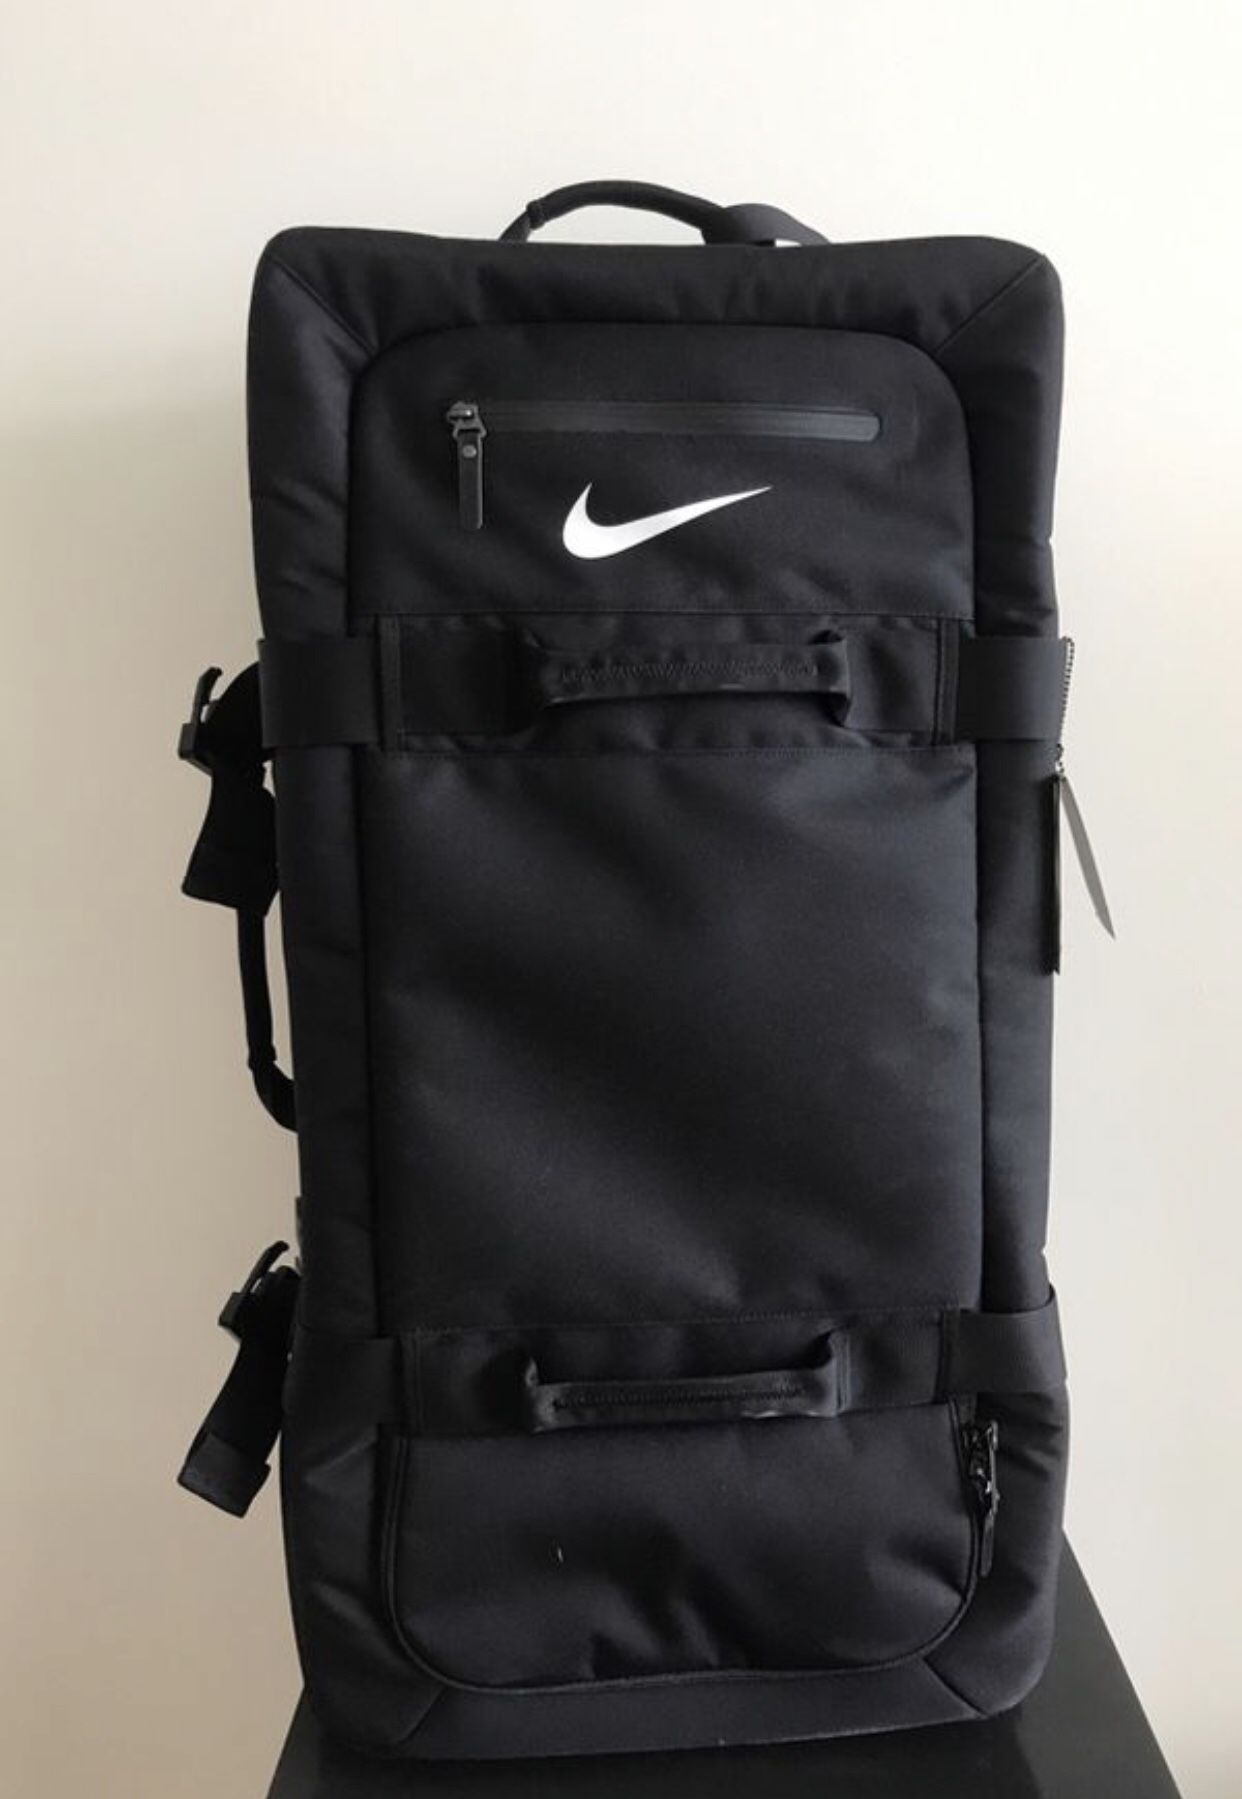 Clasificar elevación Agarrar Nike “fiftyone49” large roller suitcase for Sale in Long Beach, CA - OfferUp